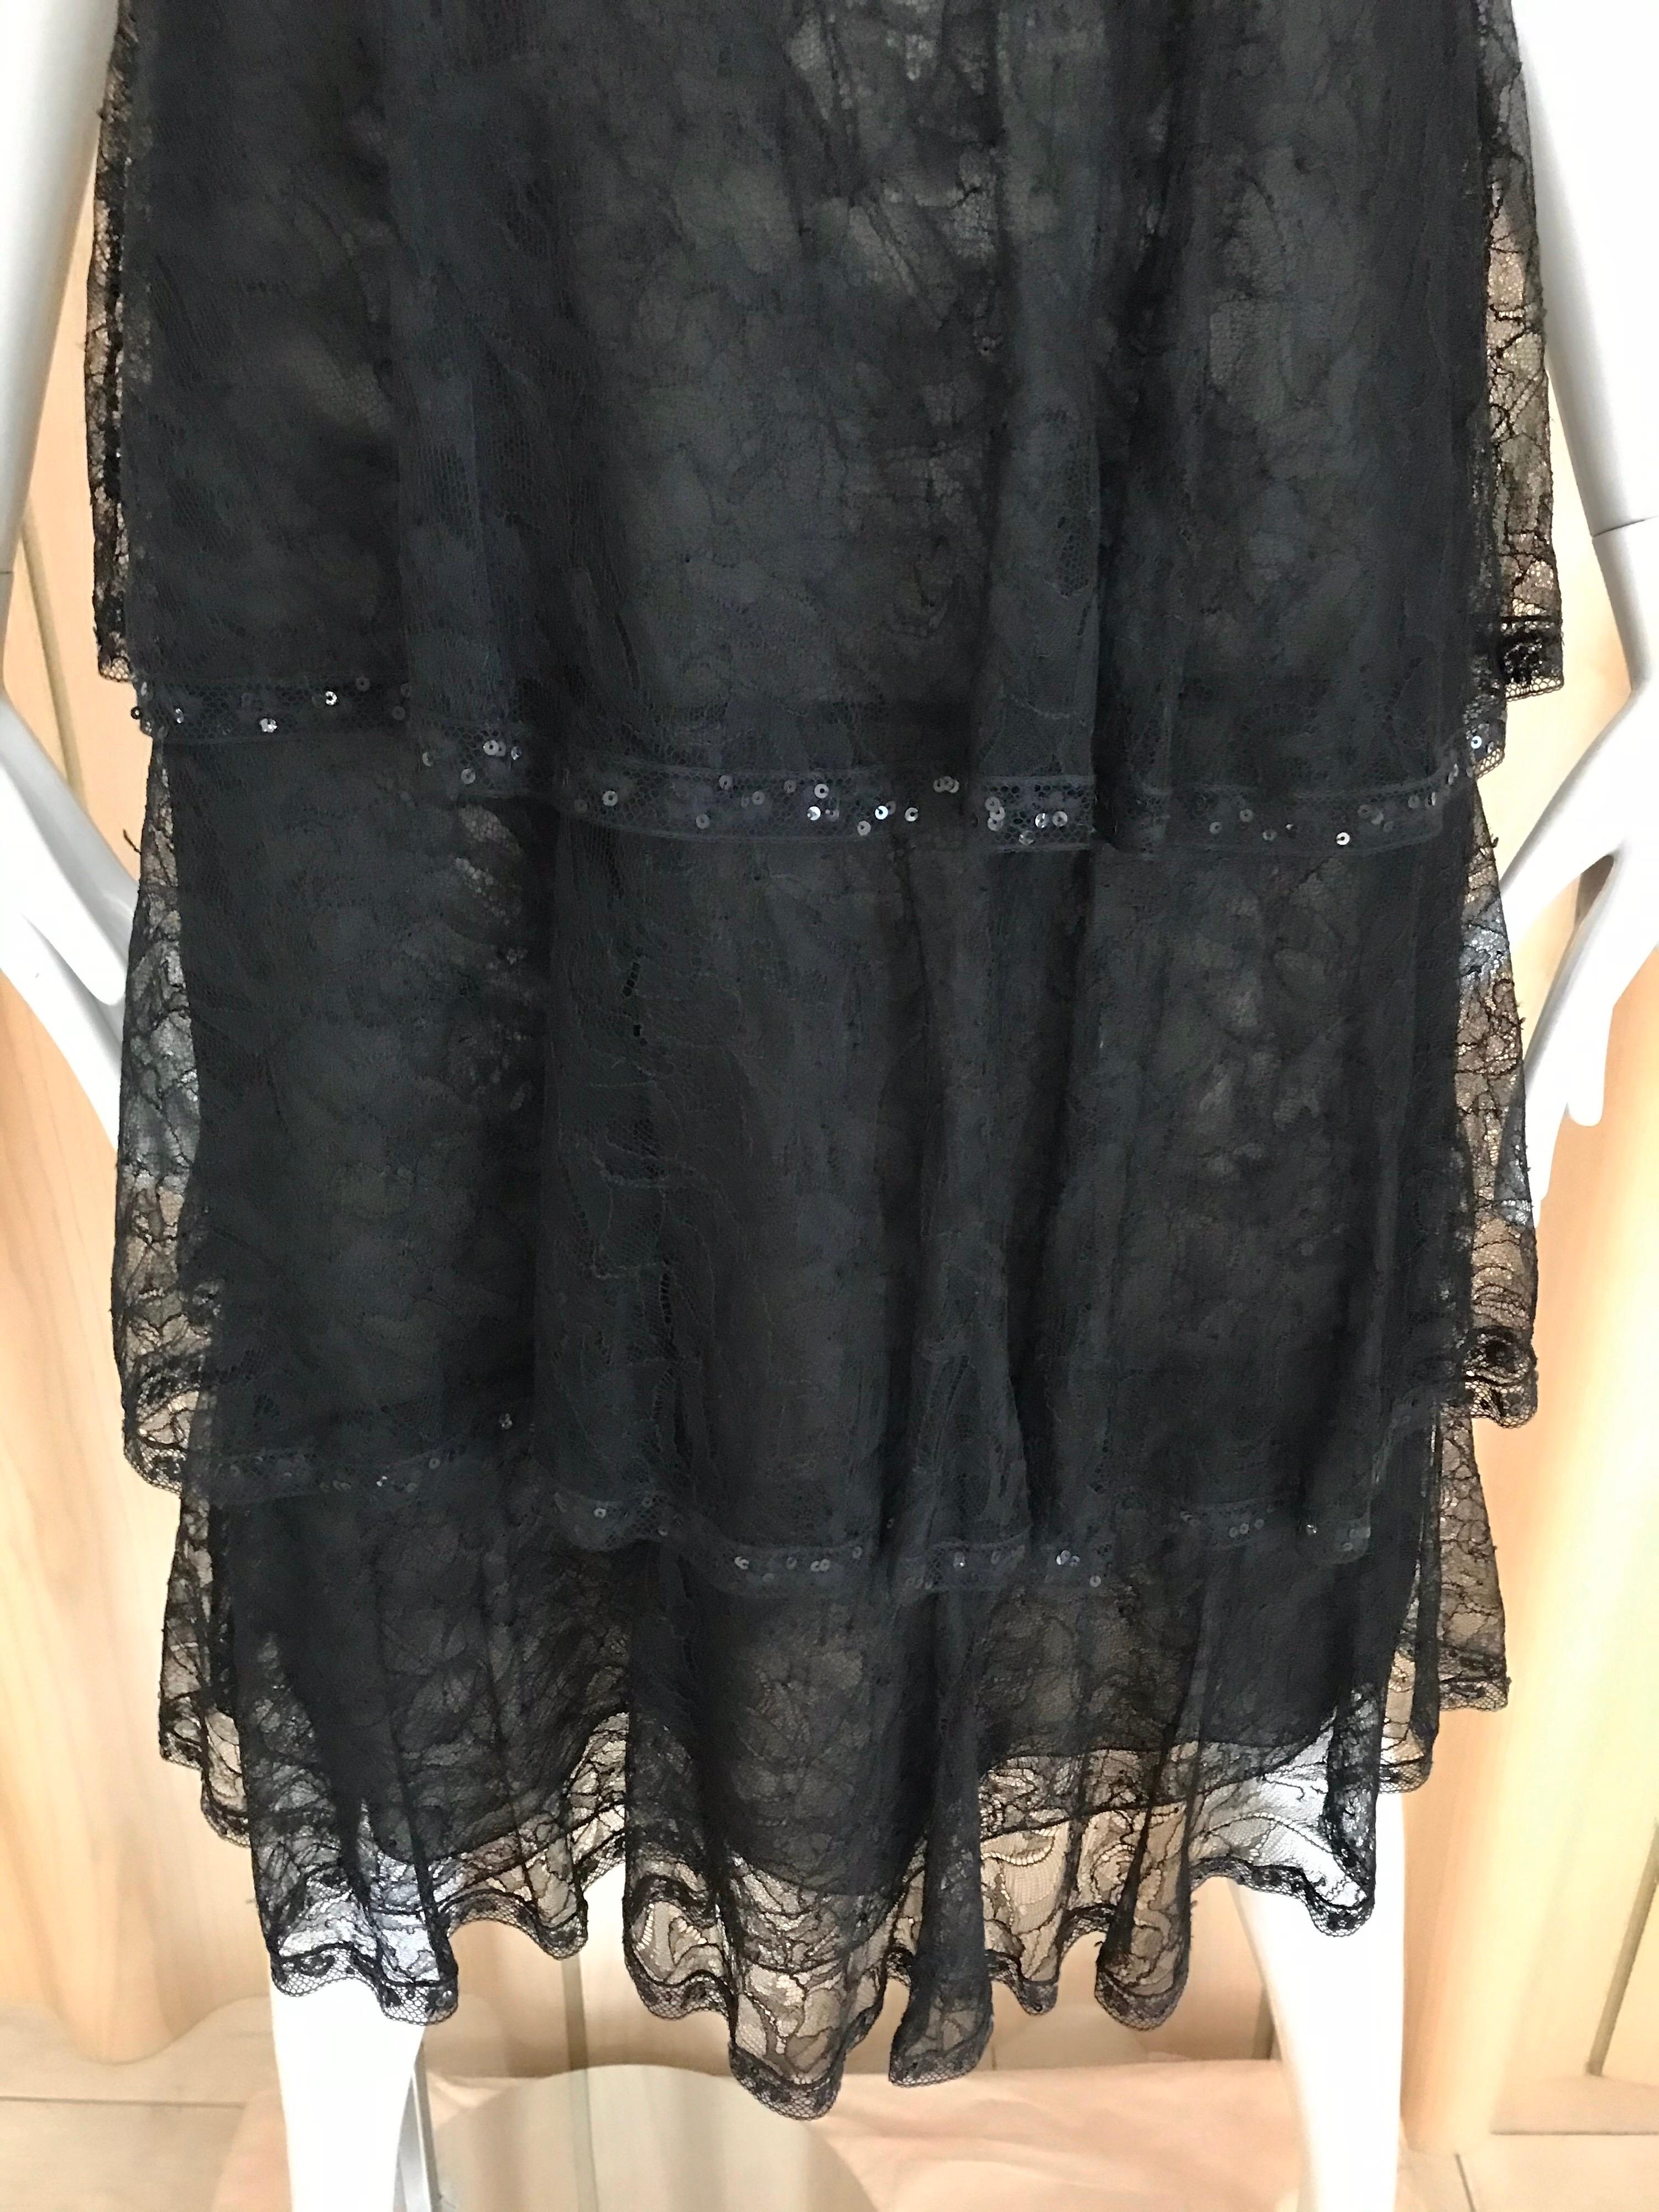 Chanel Black Lace Cocktail Dress 2